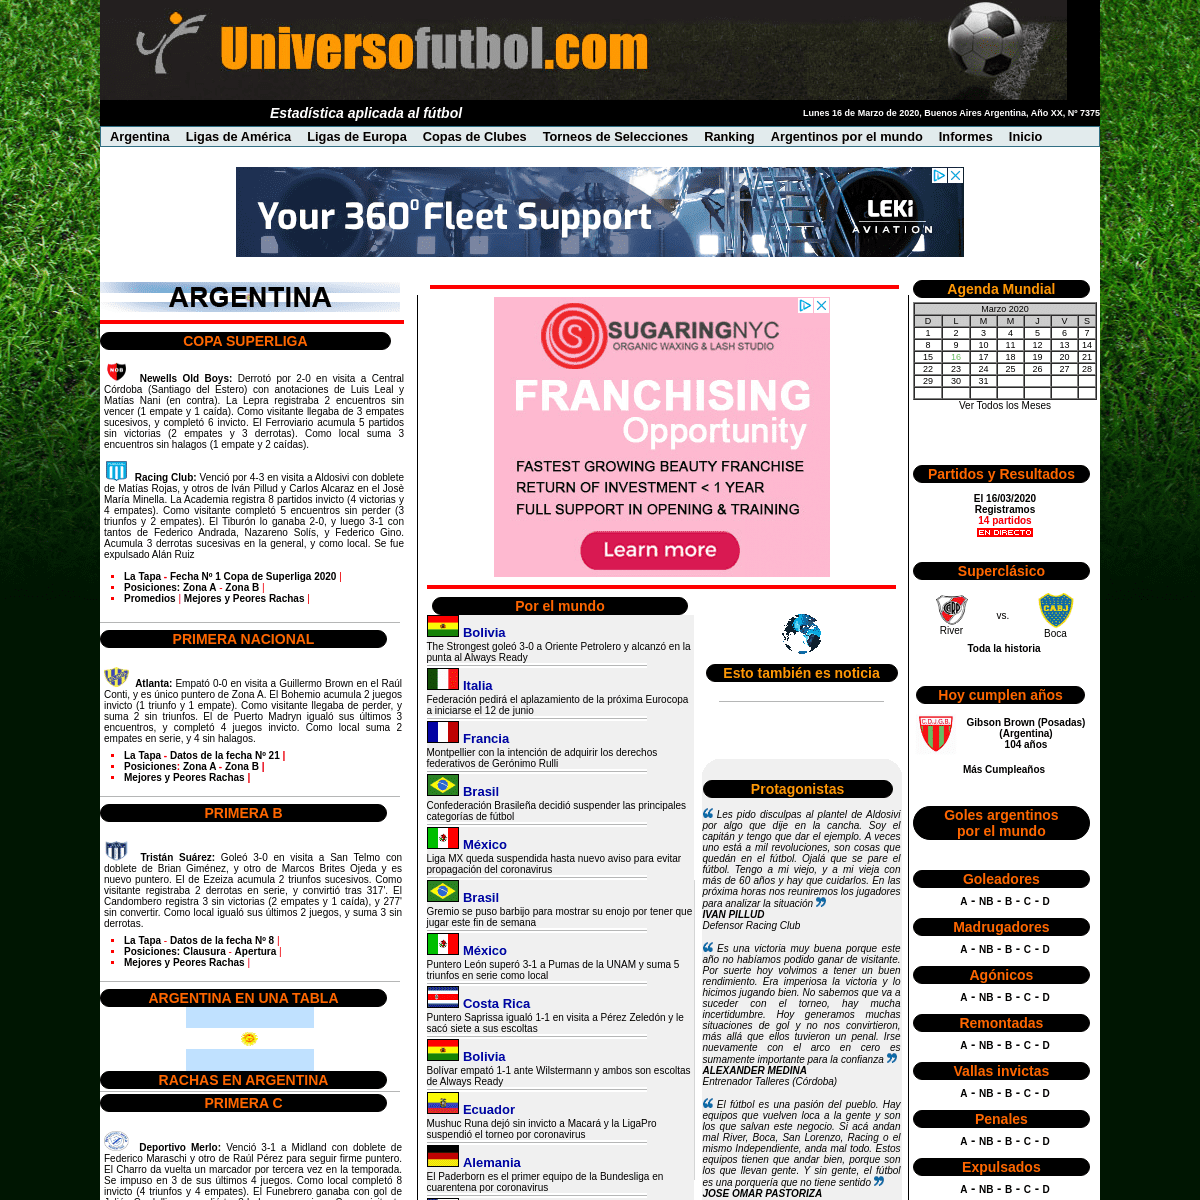 A complete backup of universofutbol.com